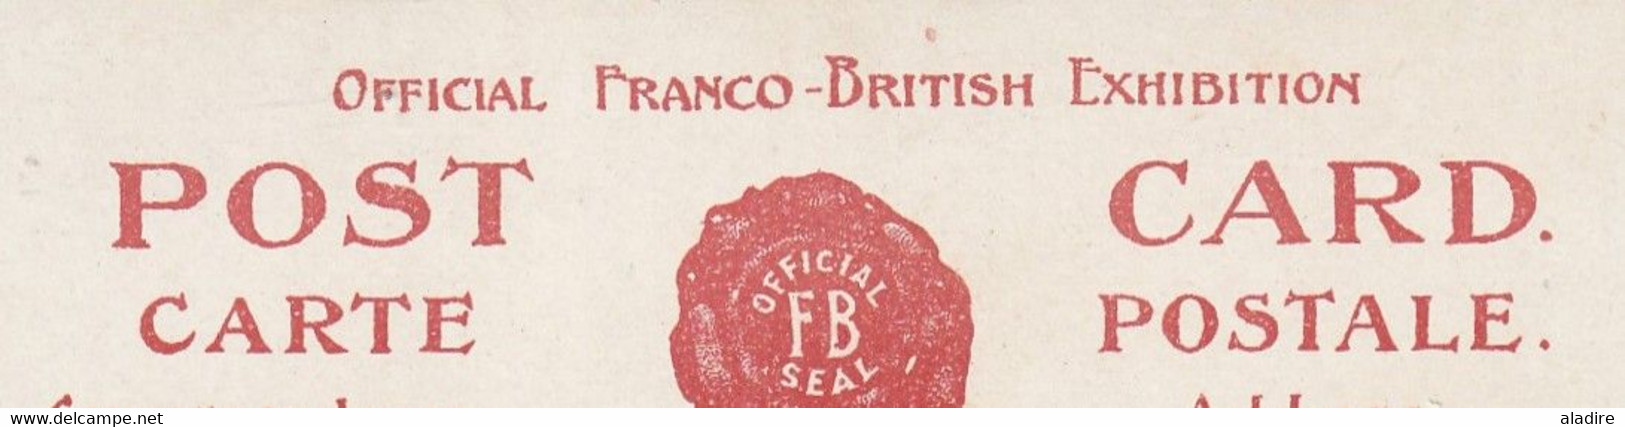 1908 - KEVII - Official FB Seal Franco-British Exhibition Postcard From London To The City - Louis XV Pavilion - Brieven En Documenten